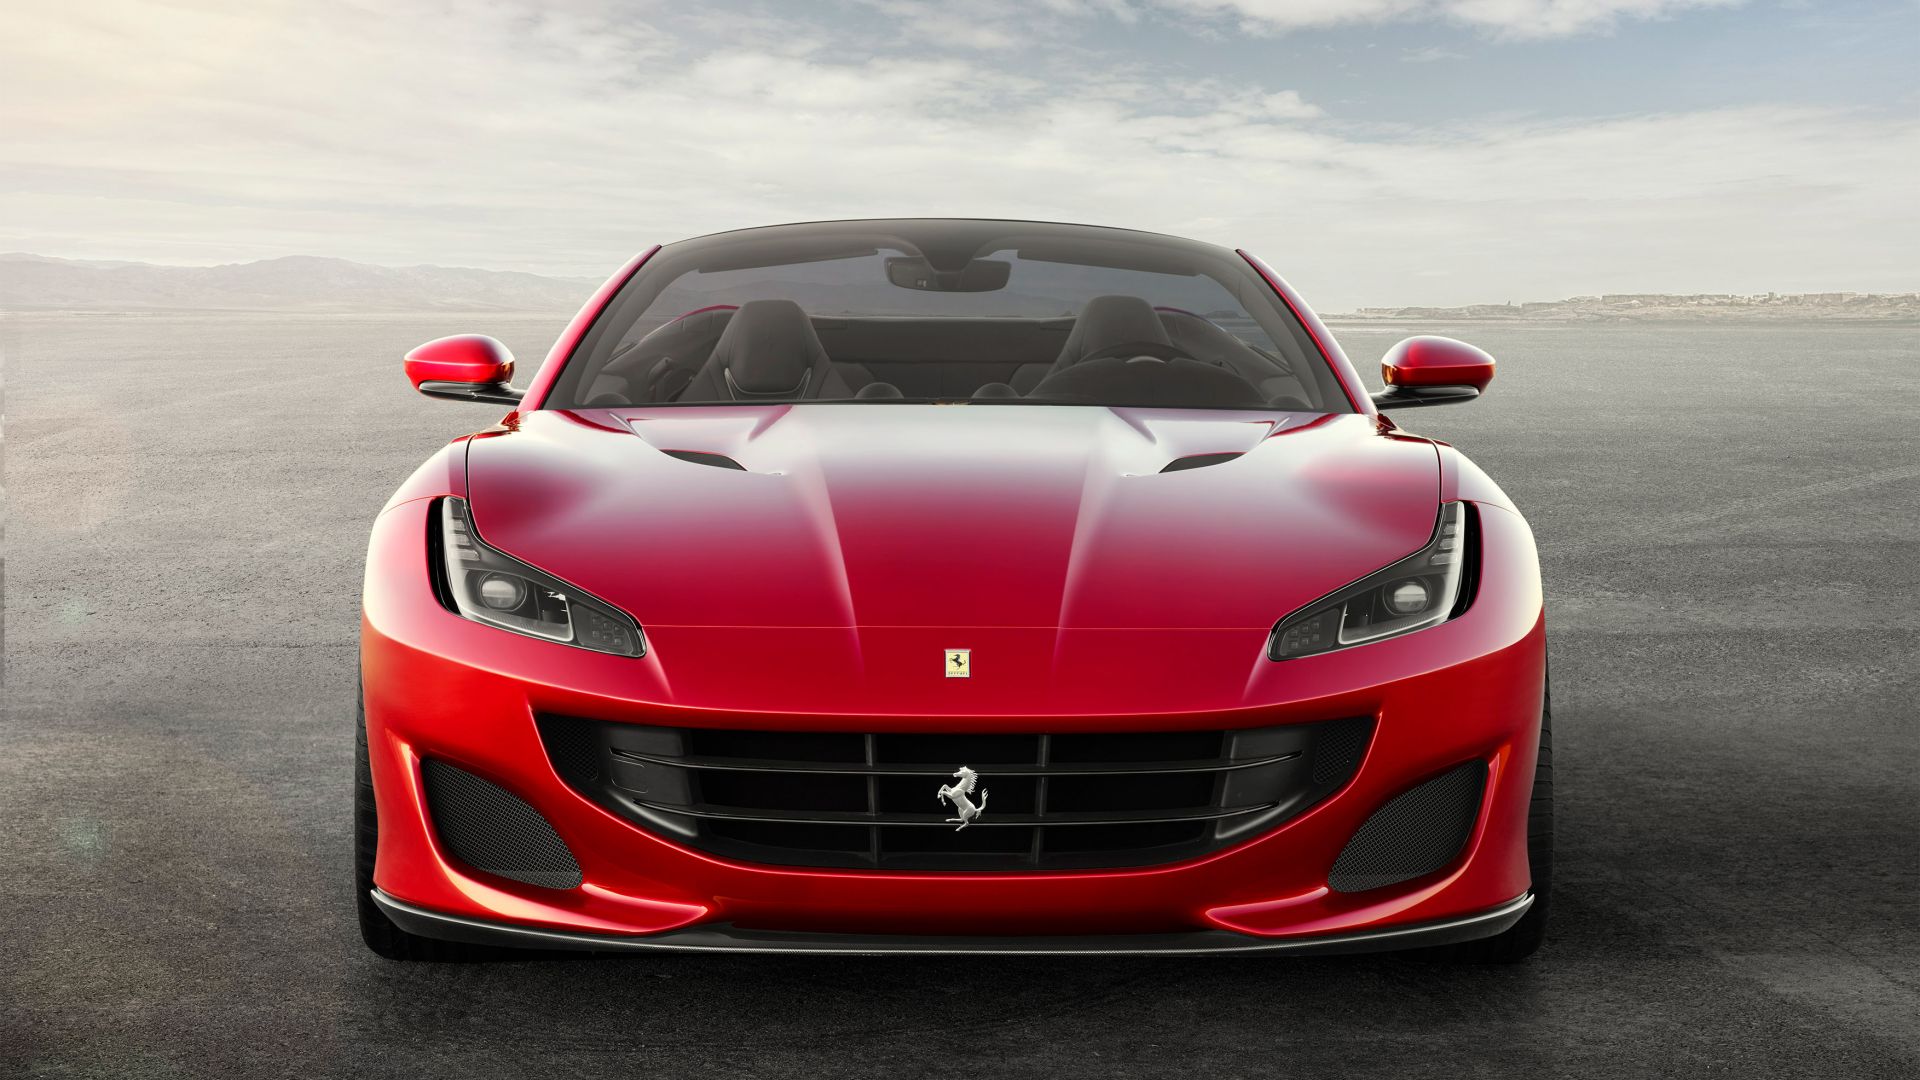 Wallpaper Ferrari Portofino, red sports car, 2017 car